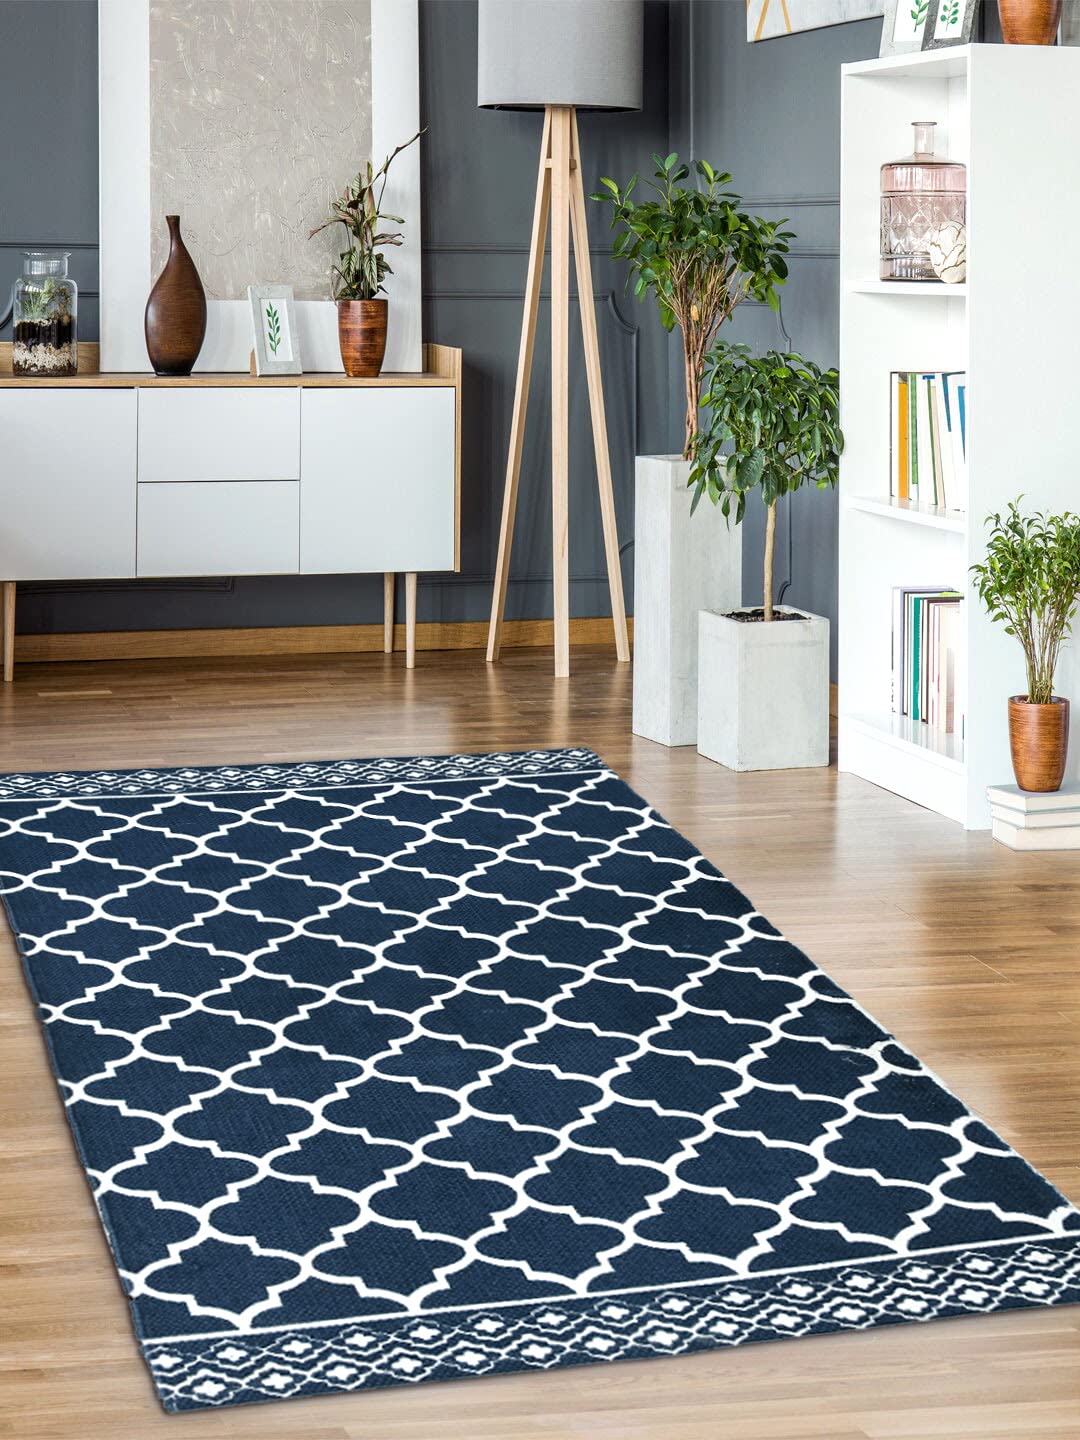 Chic Home Cotton Multipurpose Handloom Printed Extra Large Floor Rug (Blue)